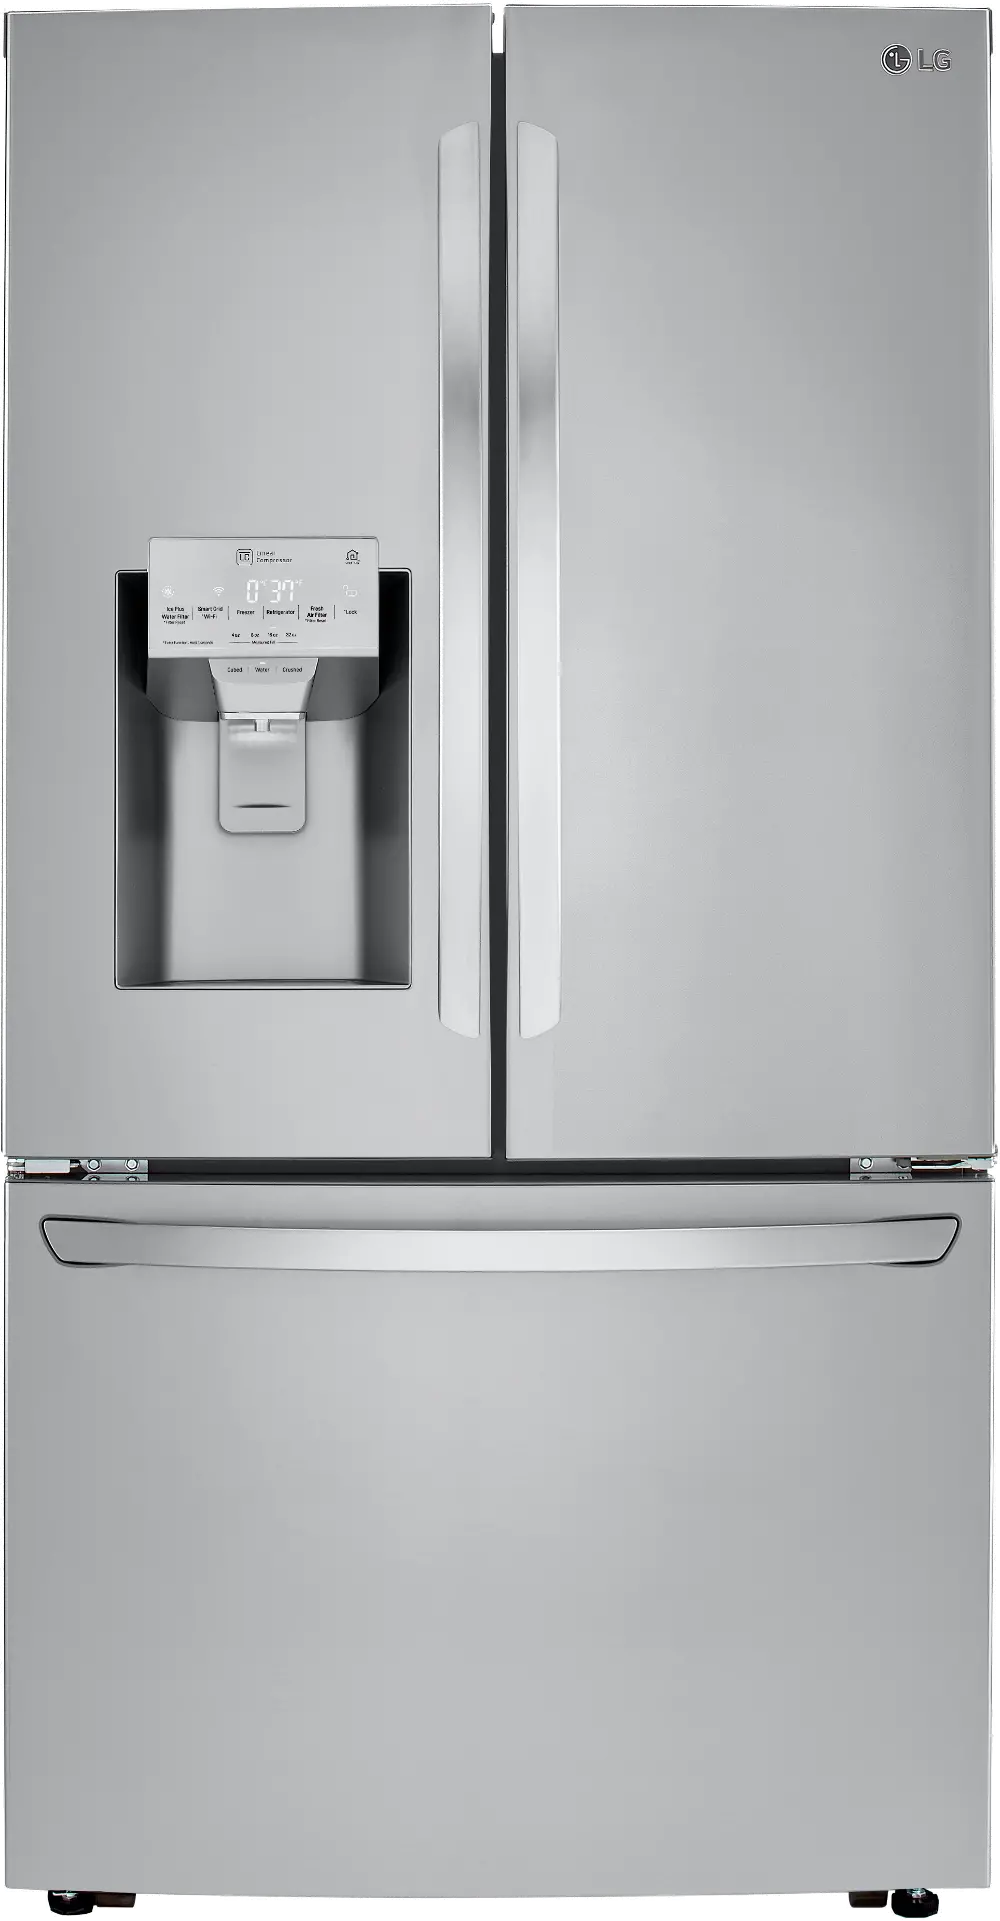 LRFXC2416S LG 23.5 cu ft French Door Refrigerator - Counter Depth Stainless Steel-1